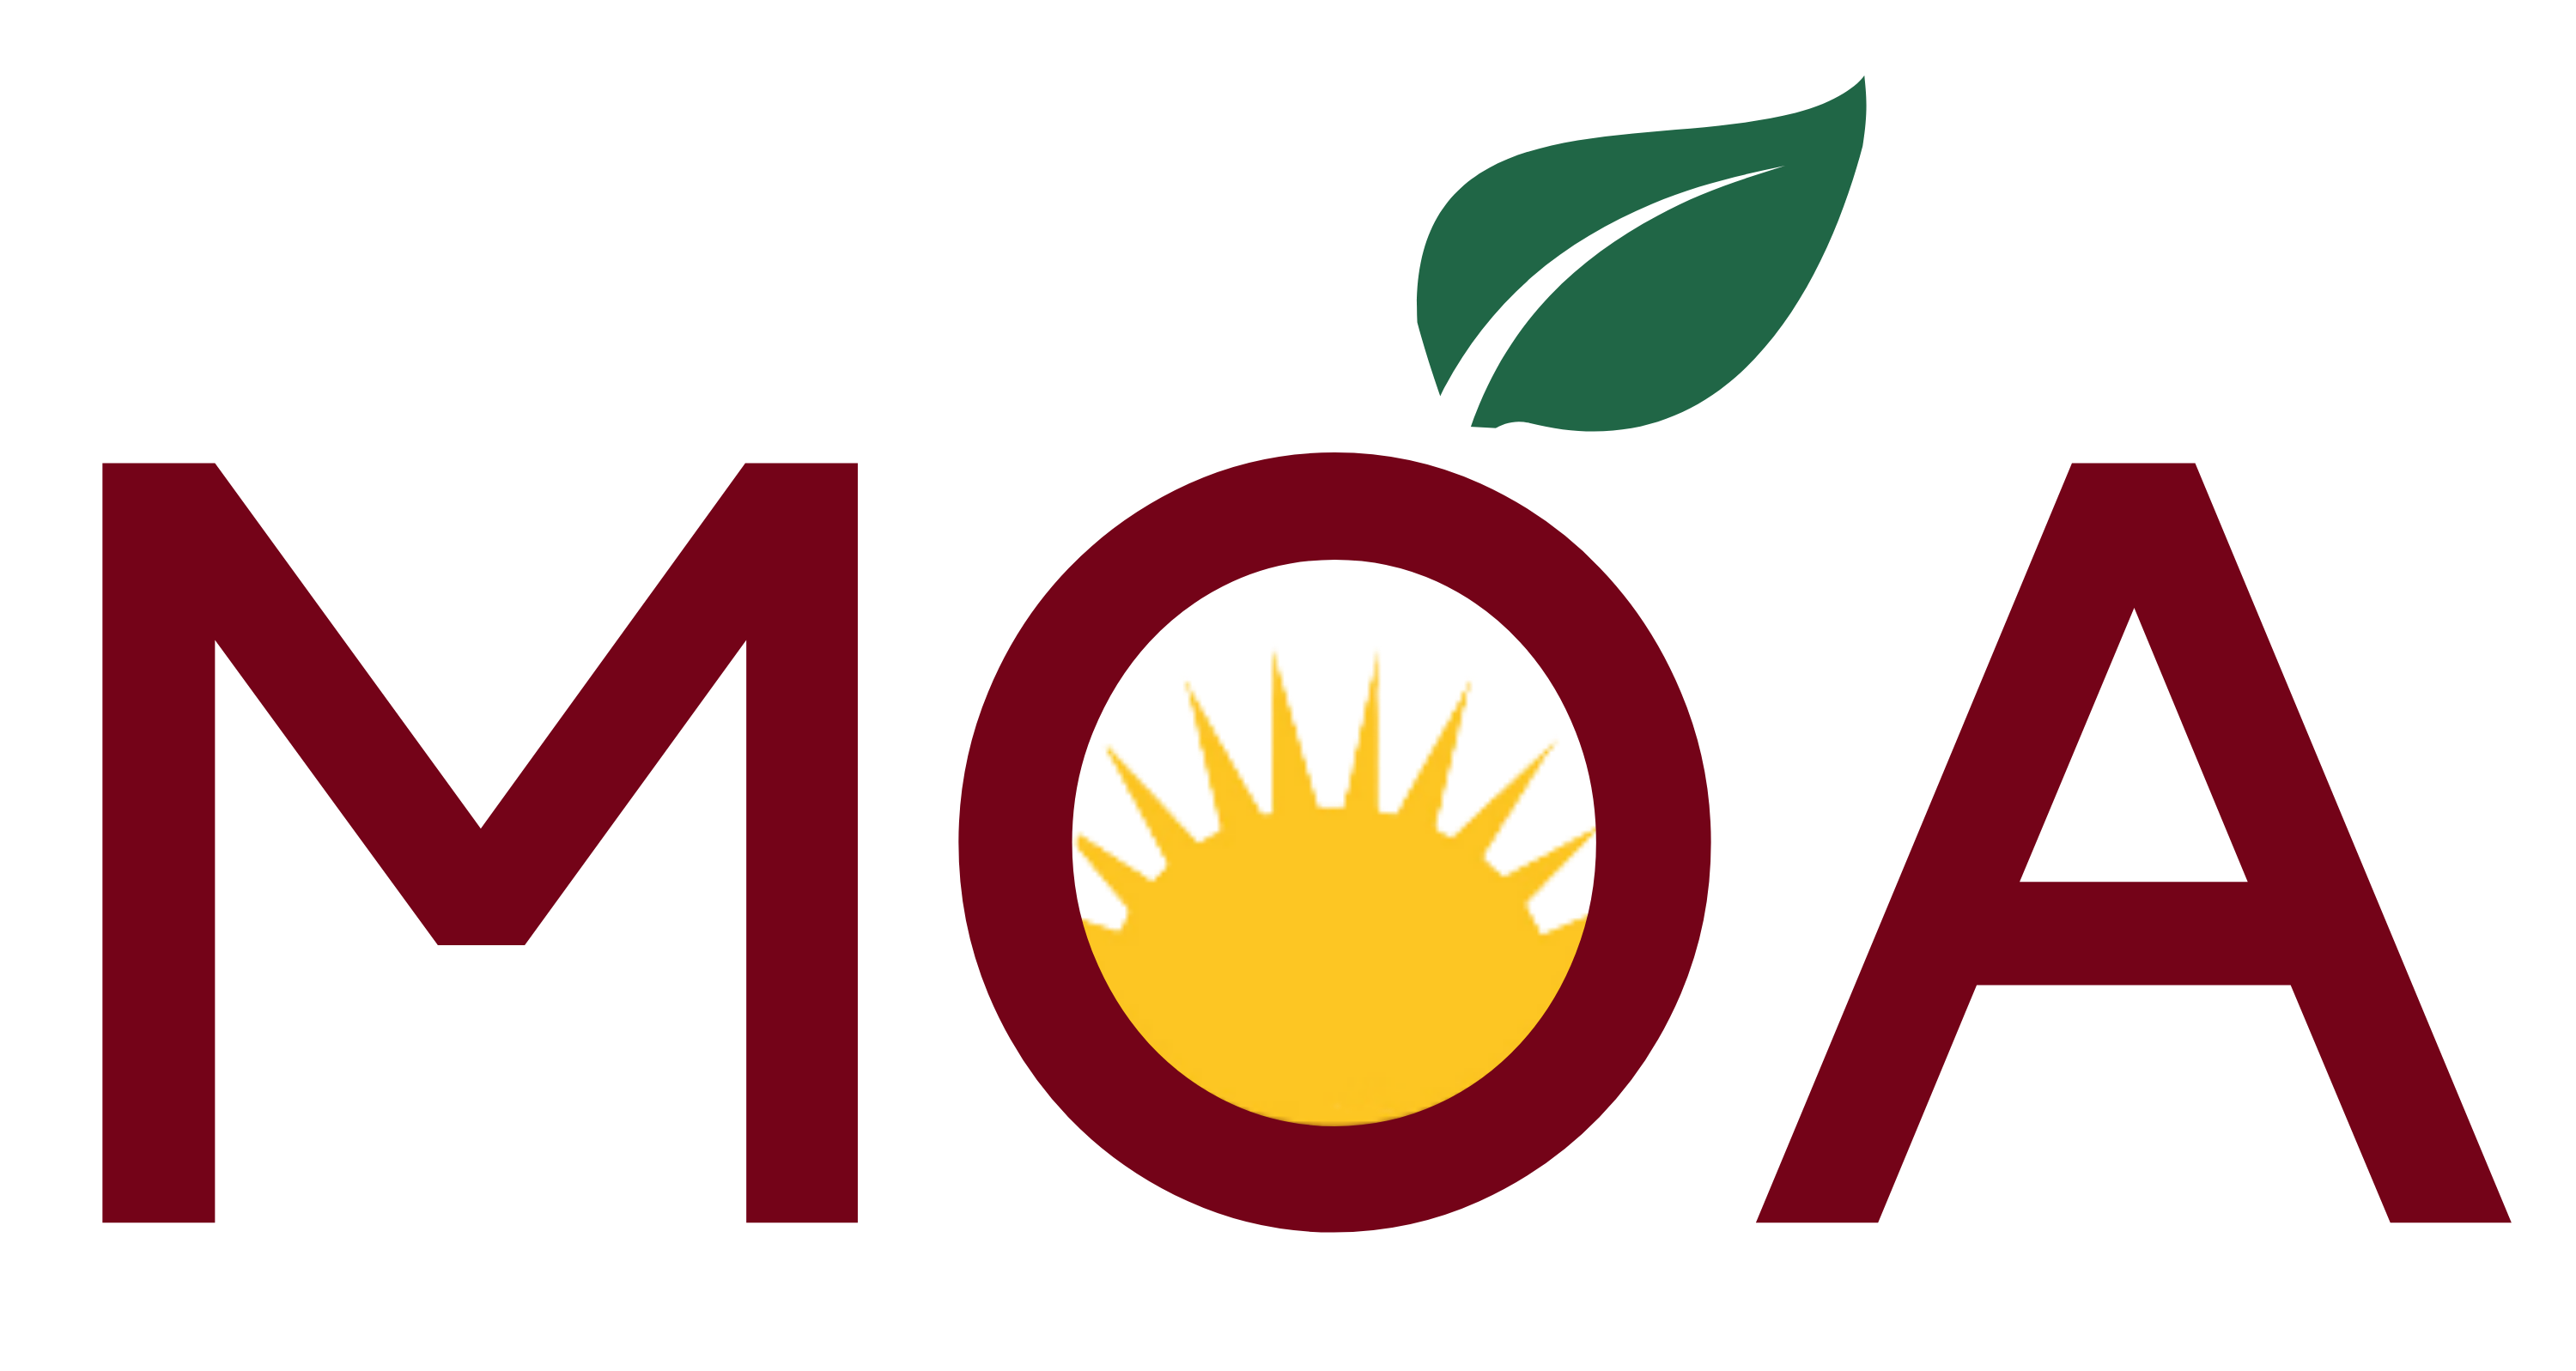 Missouri Organic Association